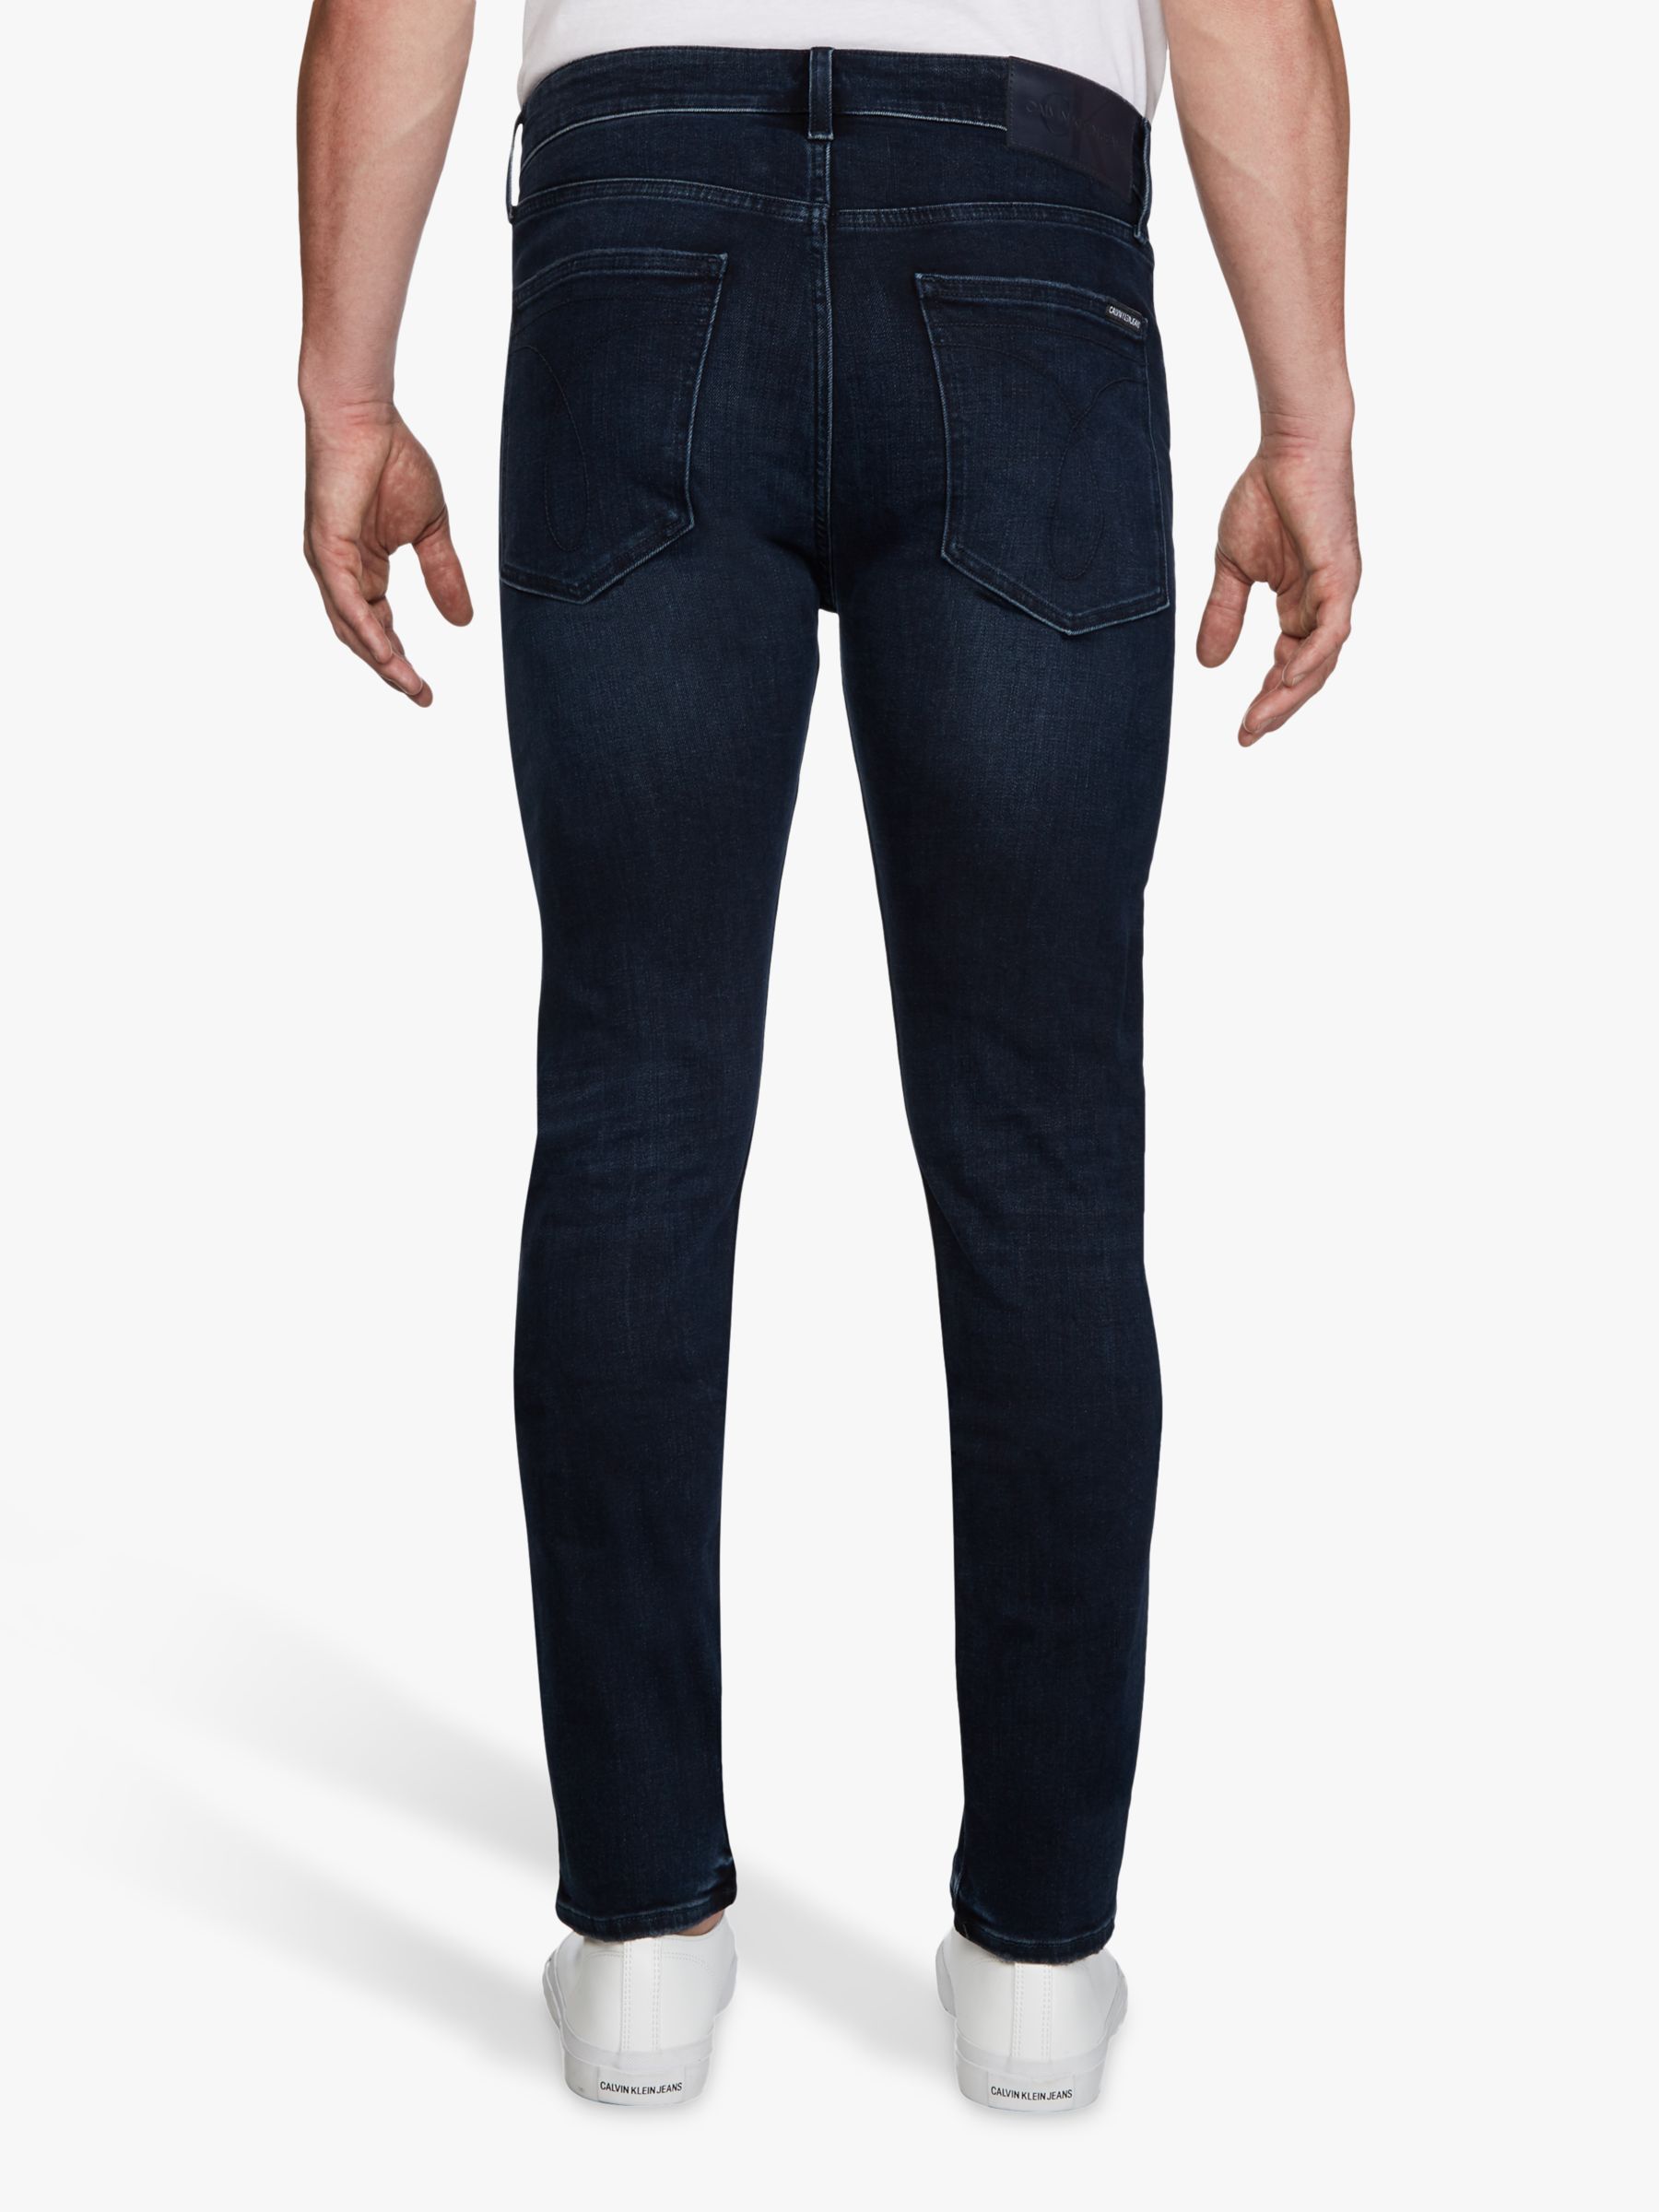 Calvin Klein Jeans 016 Skinny Jeans, Blue/Black at John Lewis & Partners